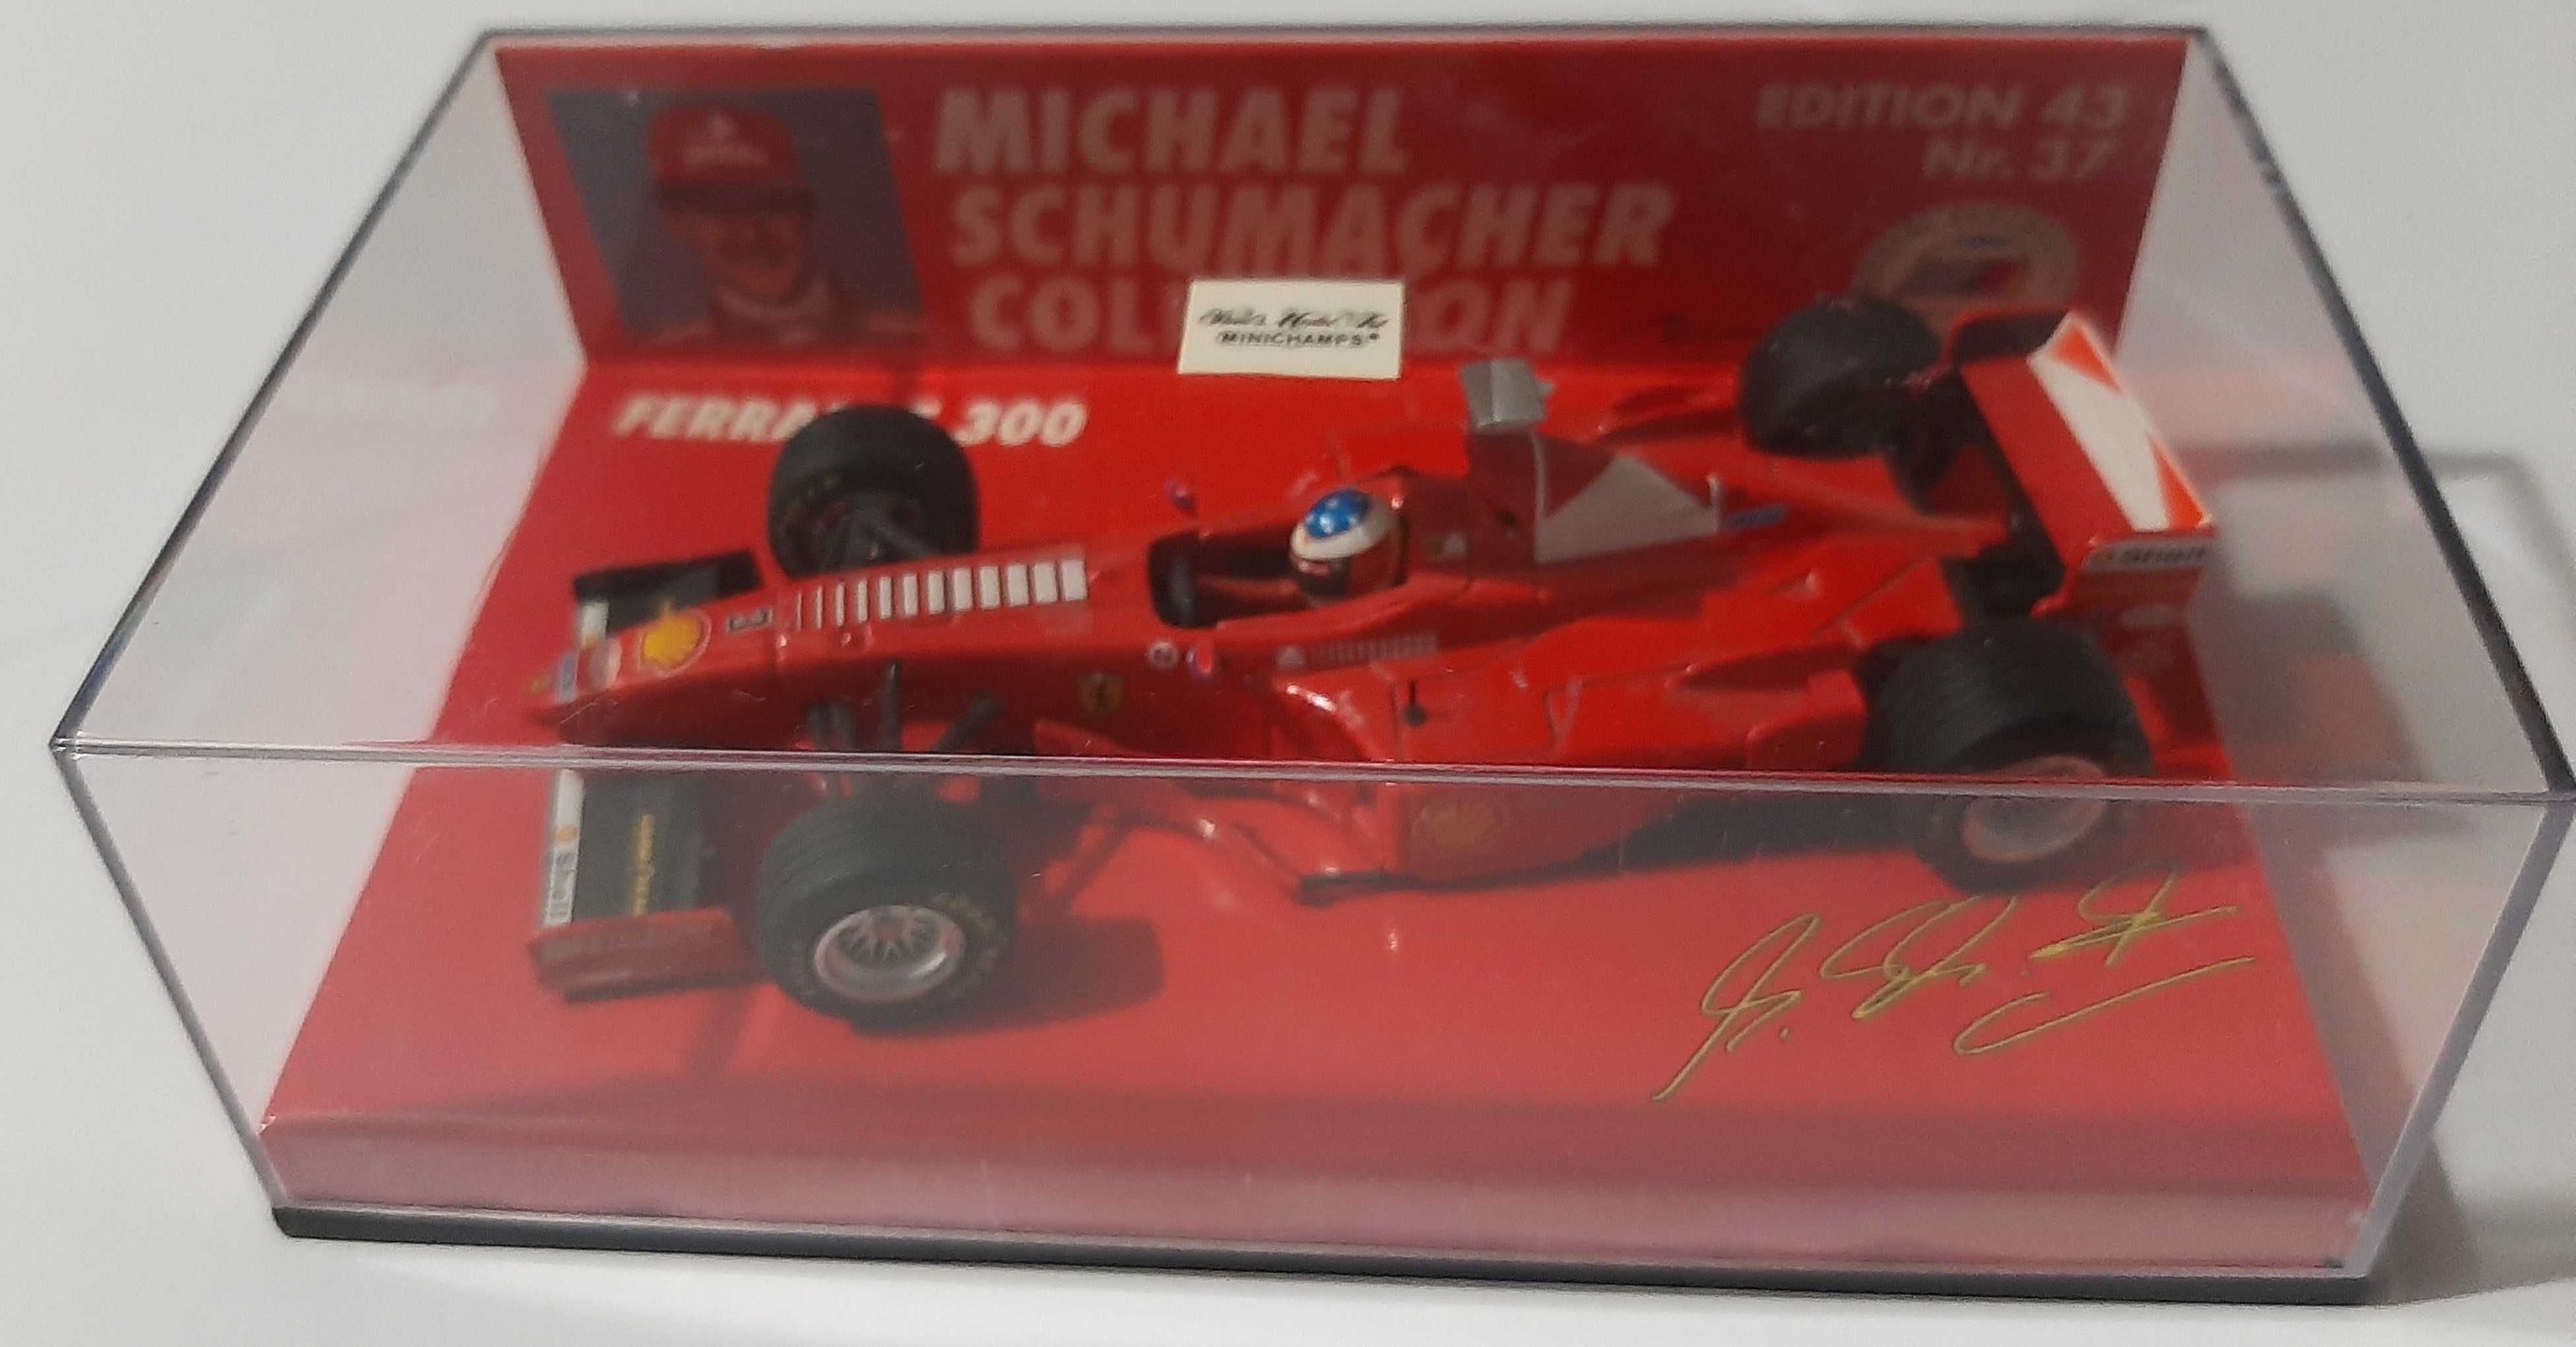 Michael Schumacher F1 Ferrari F300 de 1998 Minichamps